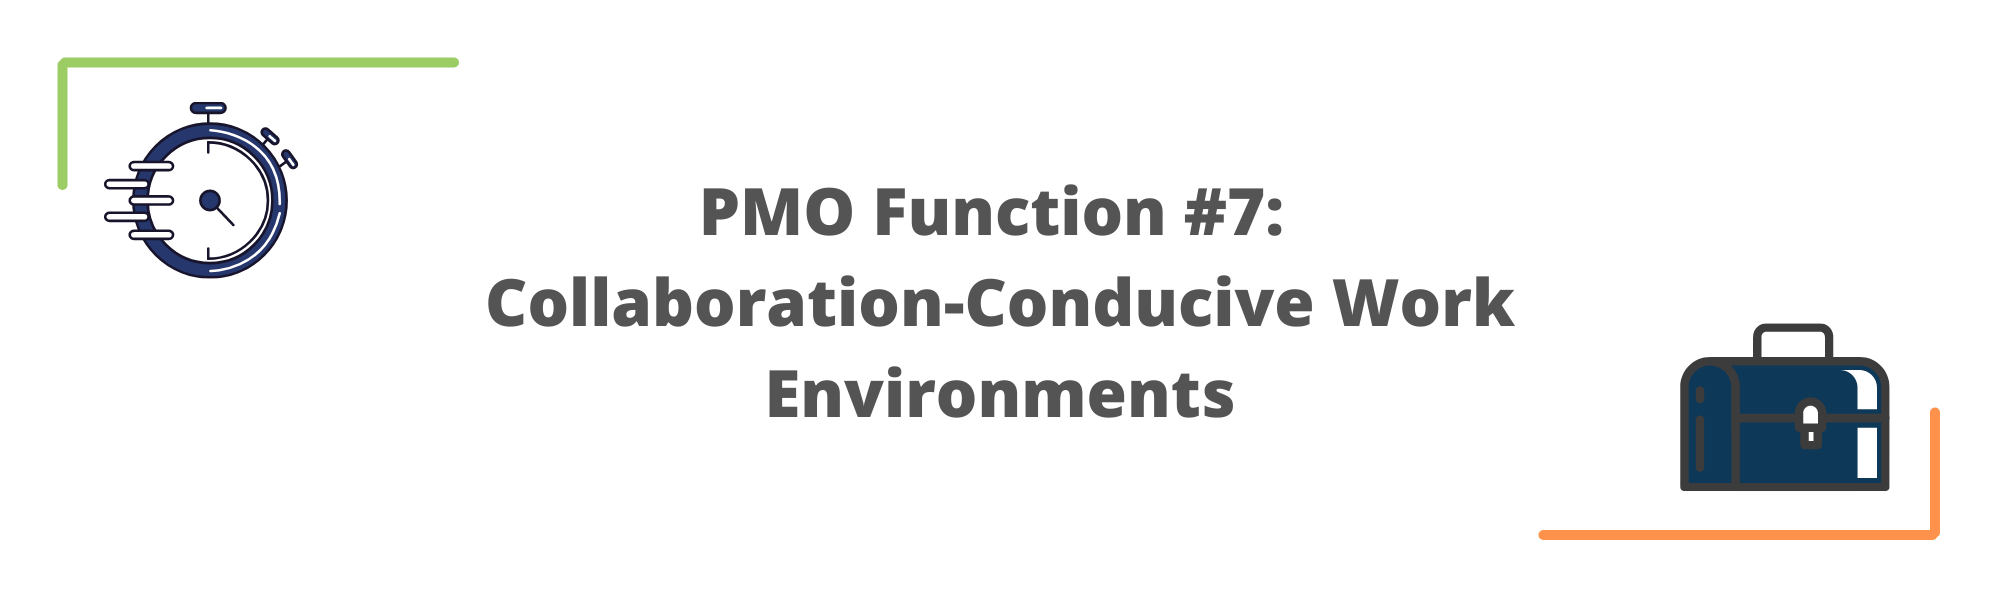 PMO Function #7 - Collaboration Conducive Work Environments